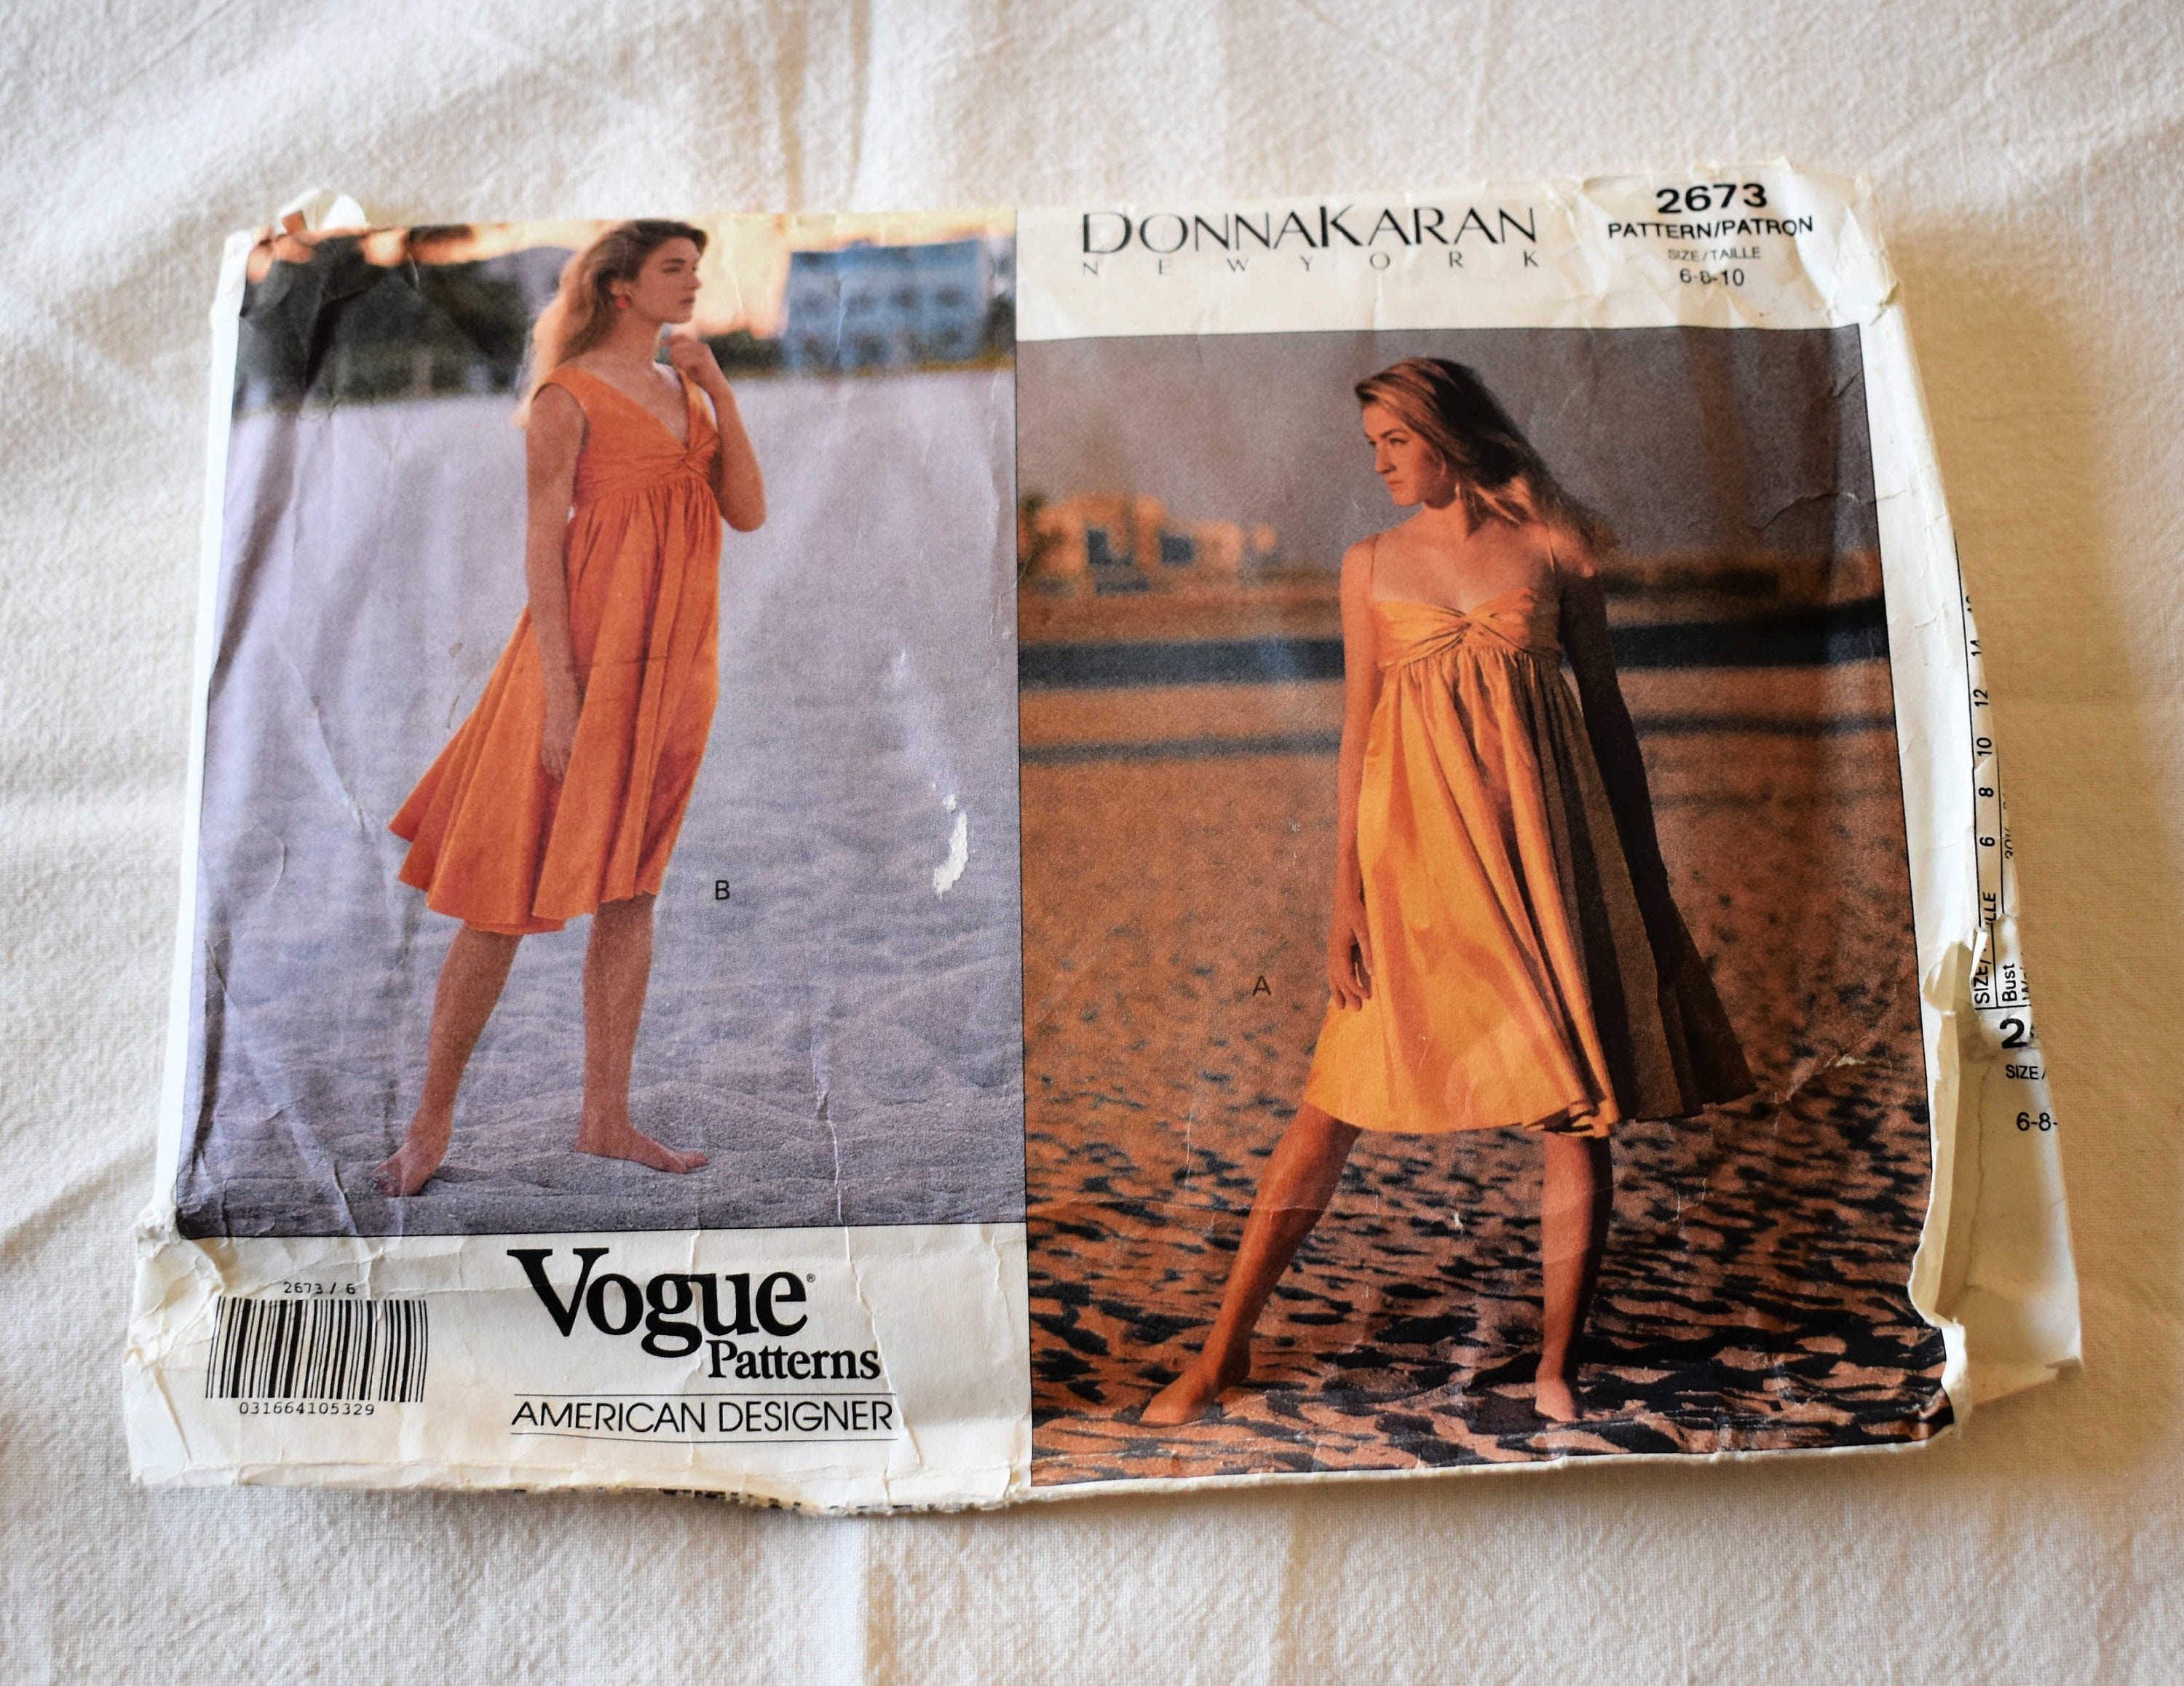 Vintage 1990s Vogue American Designer Donna Karan New York dress